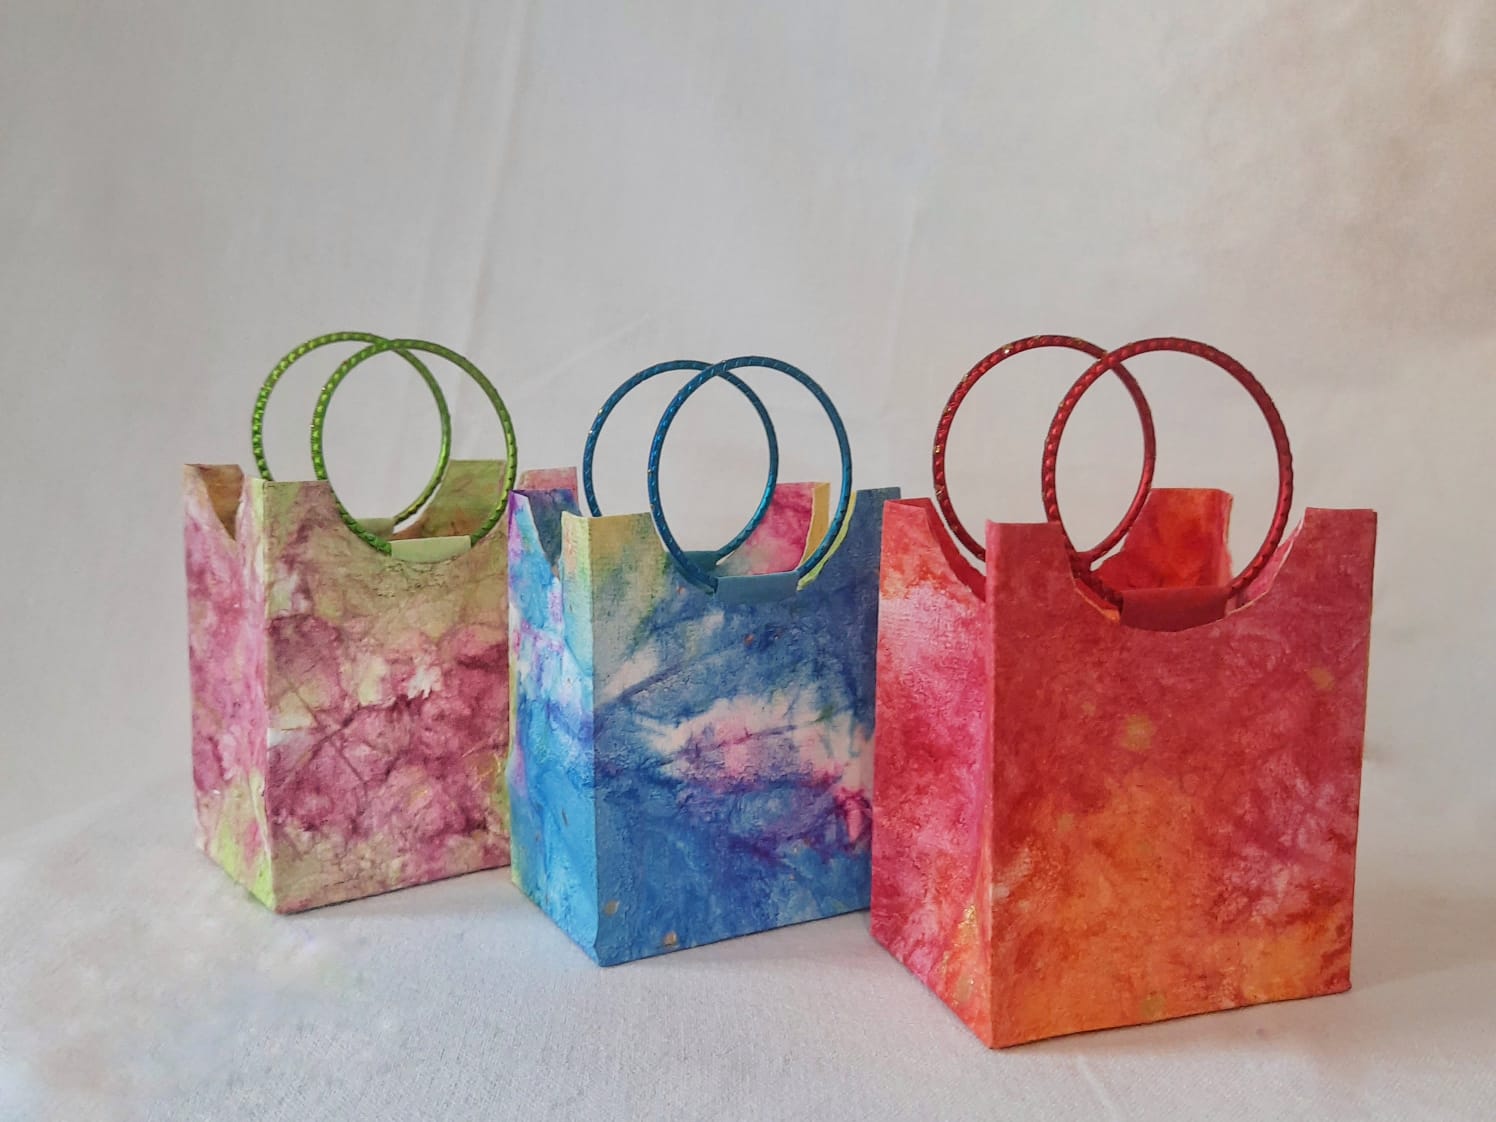 Some Return Gift Ideas for Women by handicraftsinindia - Issuu